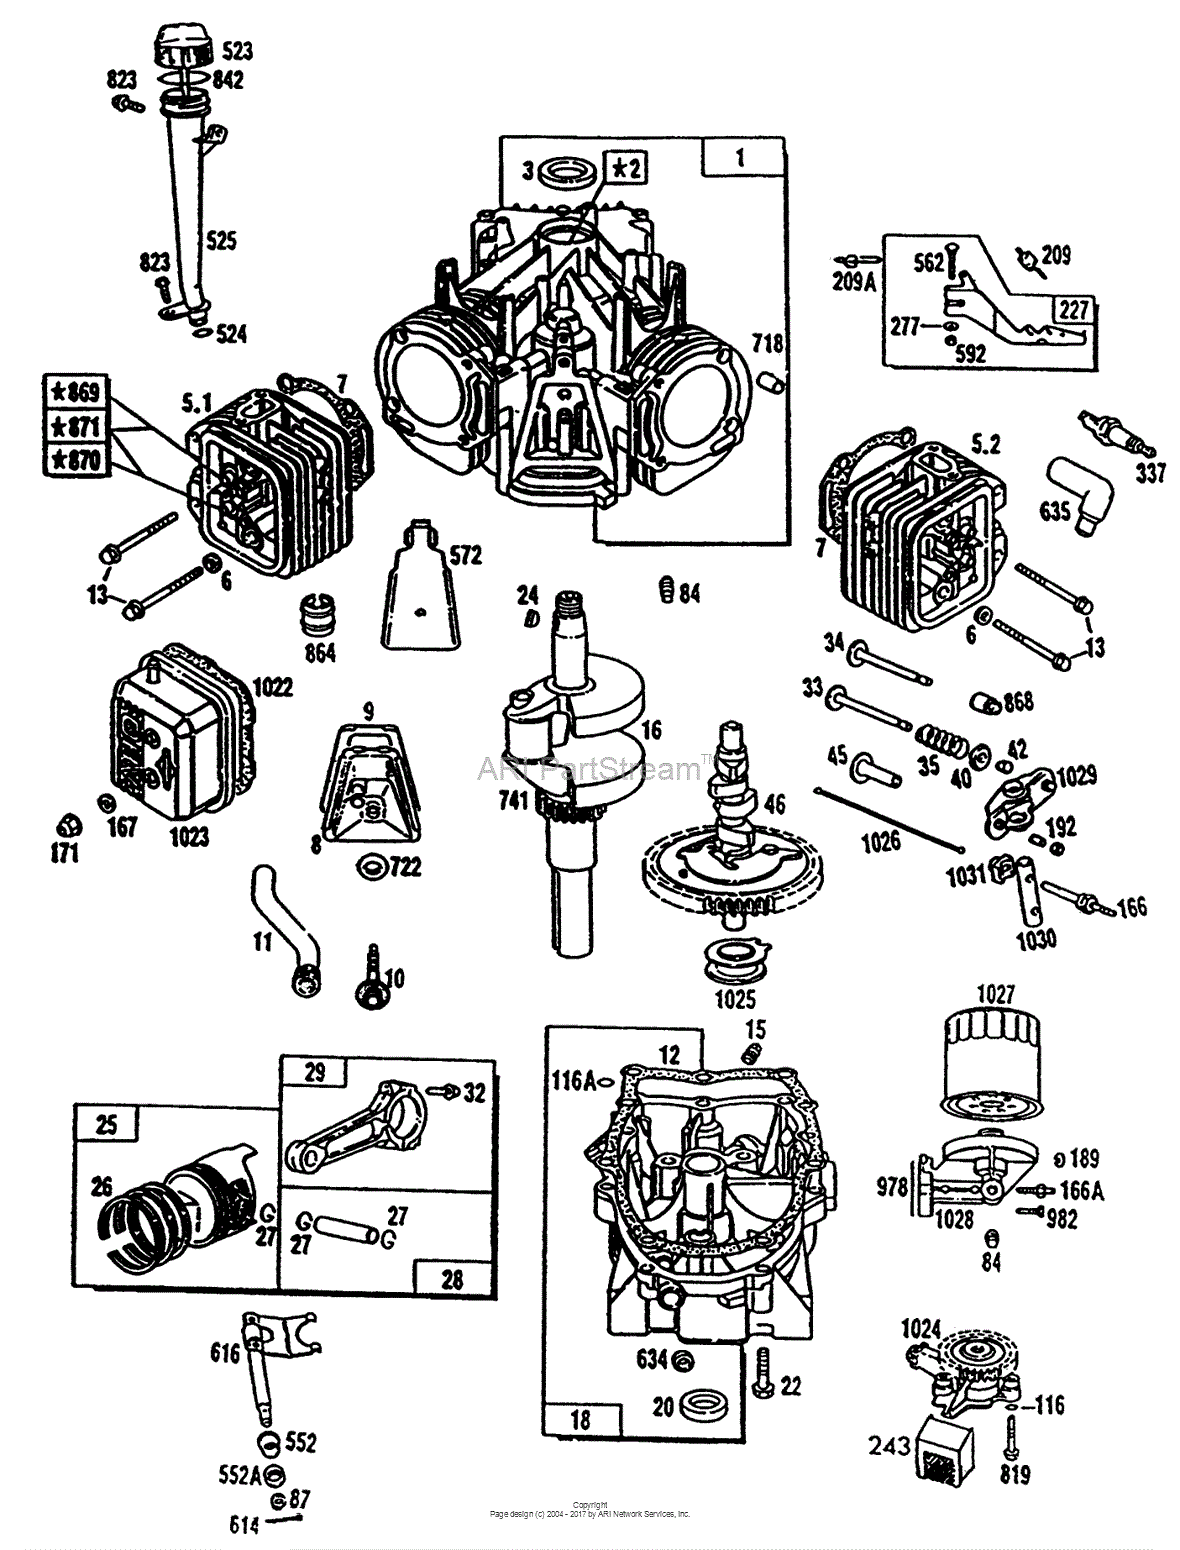 Toro 72101, 246-H Yard Tractor, 1993 (SN 3900001-3999999) Parts Diagram